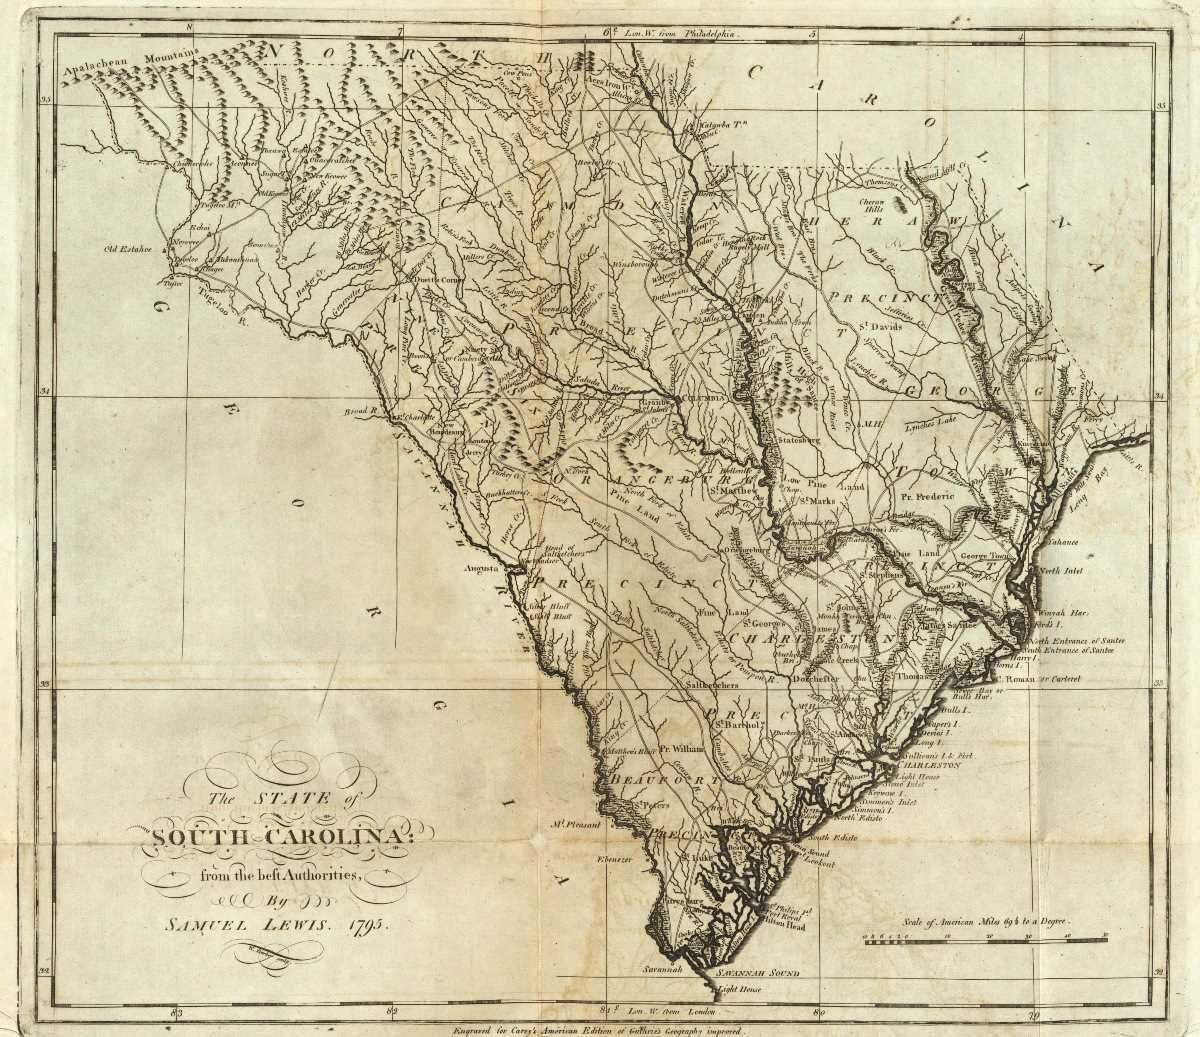 South Carolina map, ca. 1795